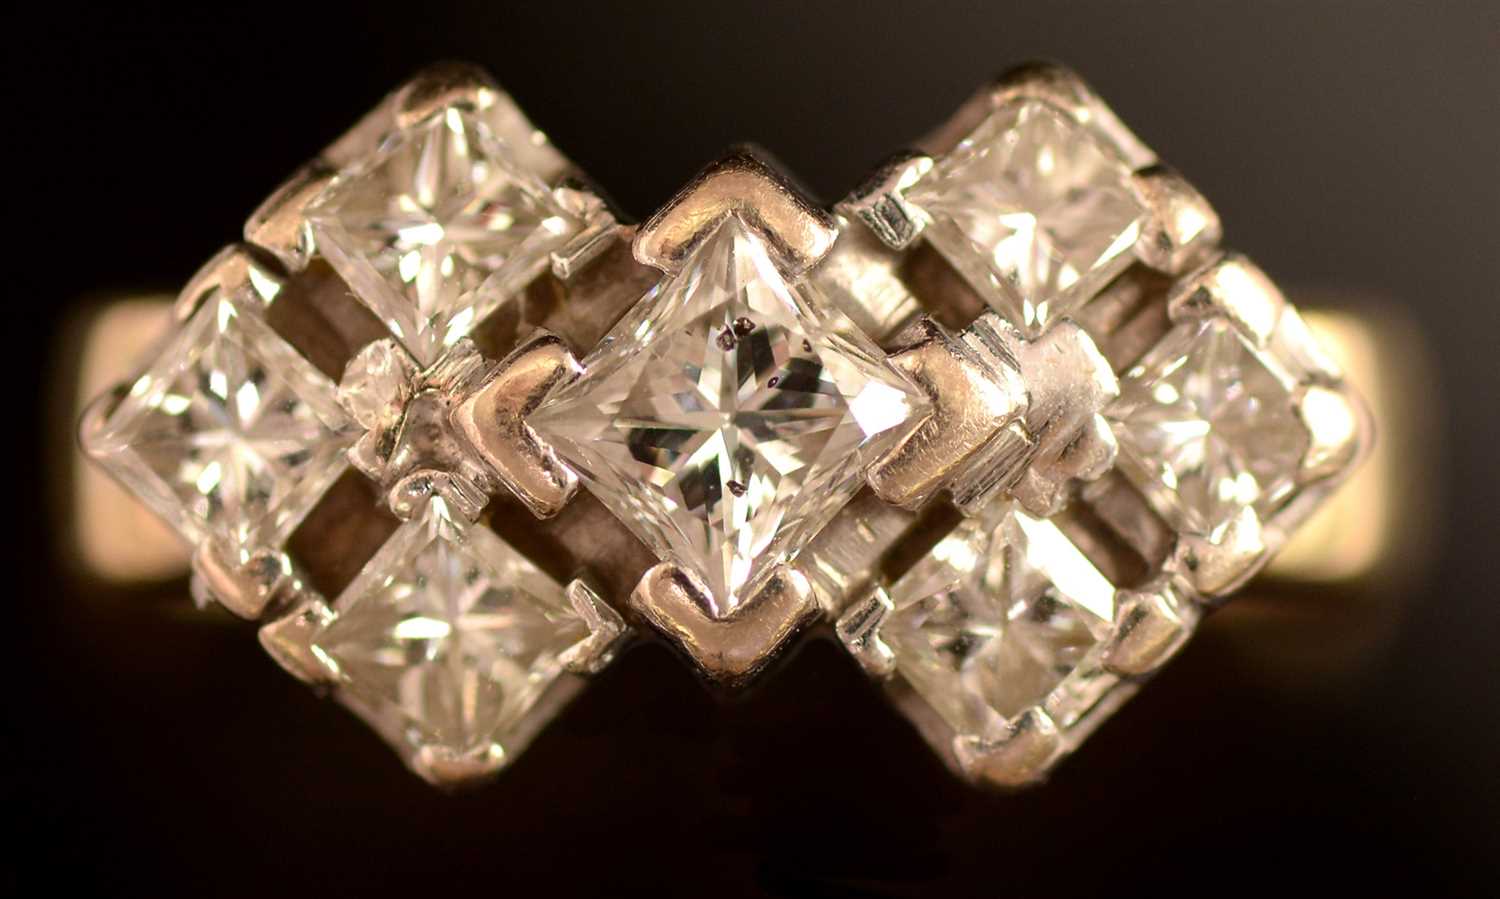 Lot 96 - Diamond dress ring